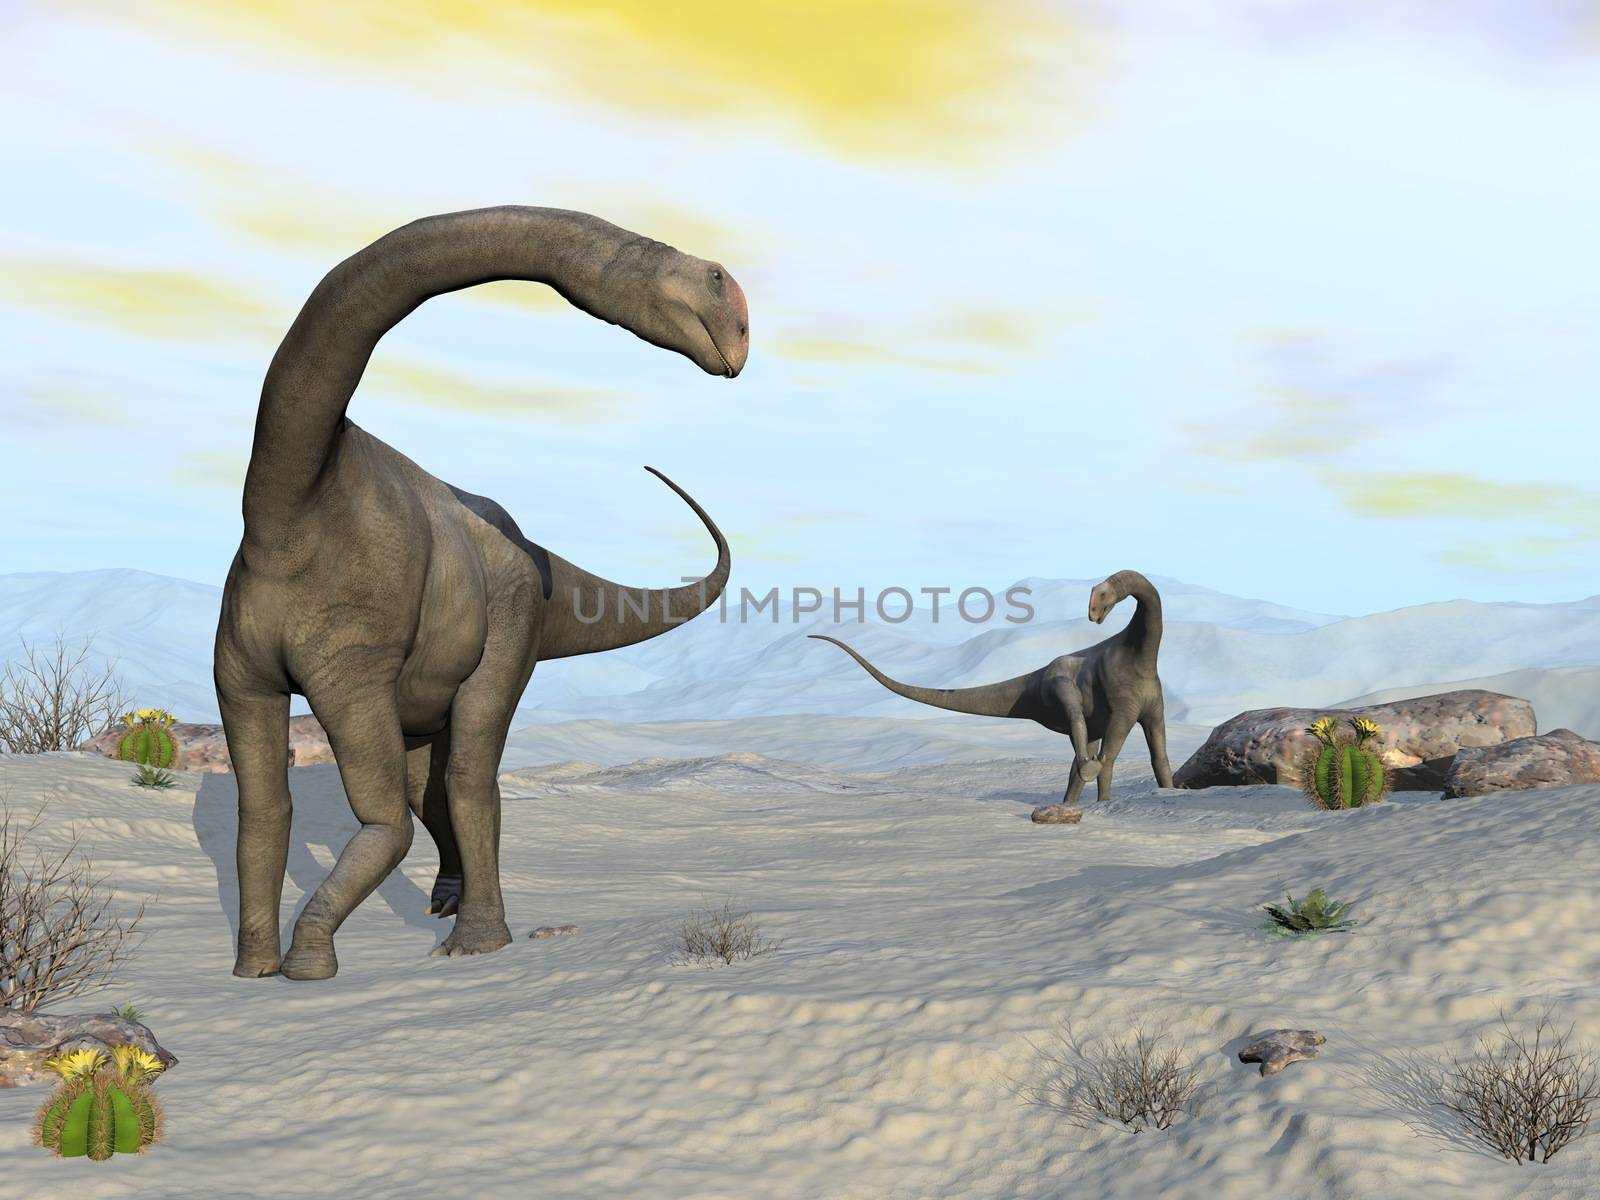 Two brontomerus dinosaurs walking in the desert - 3D render